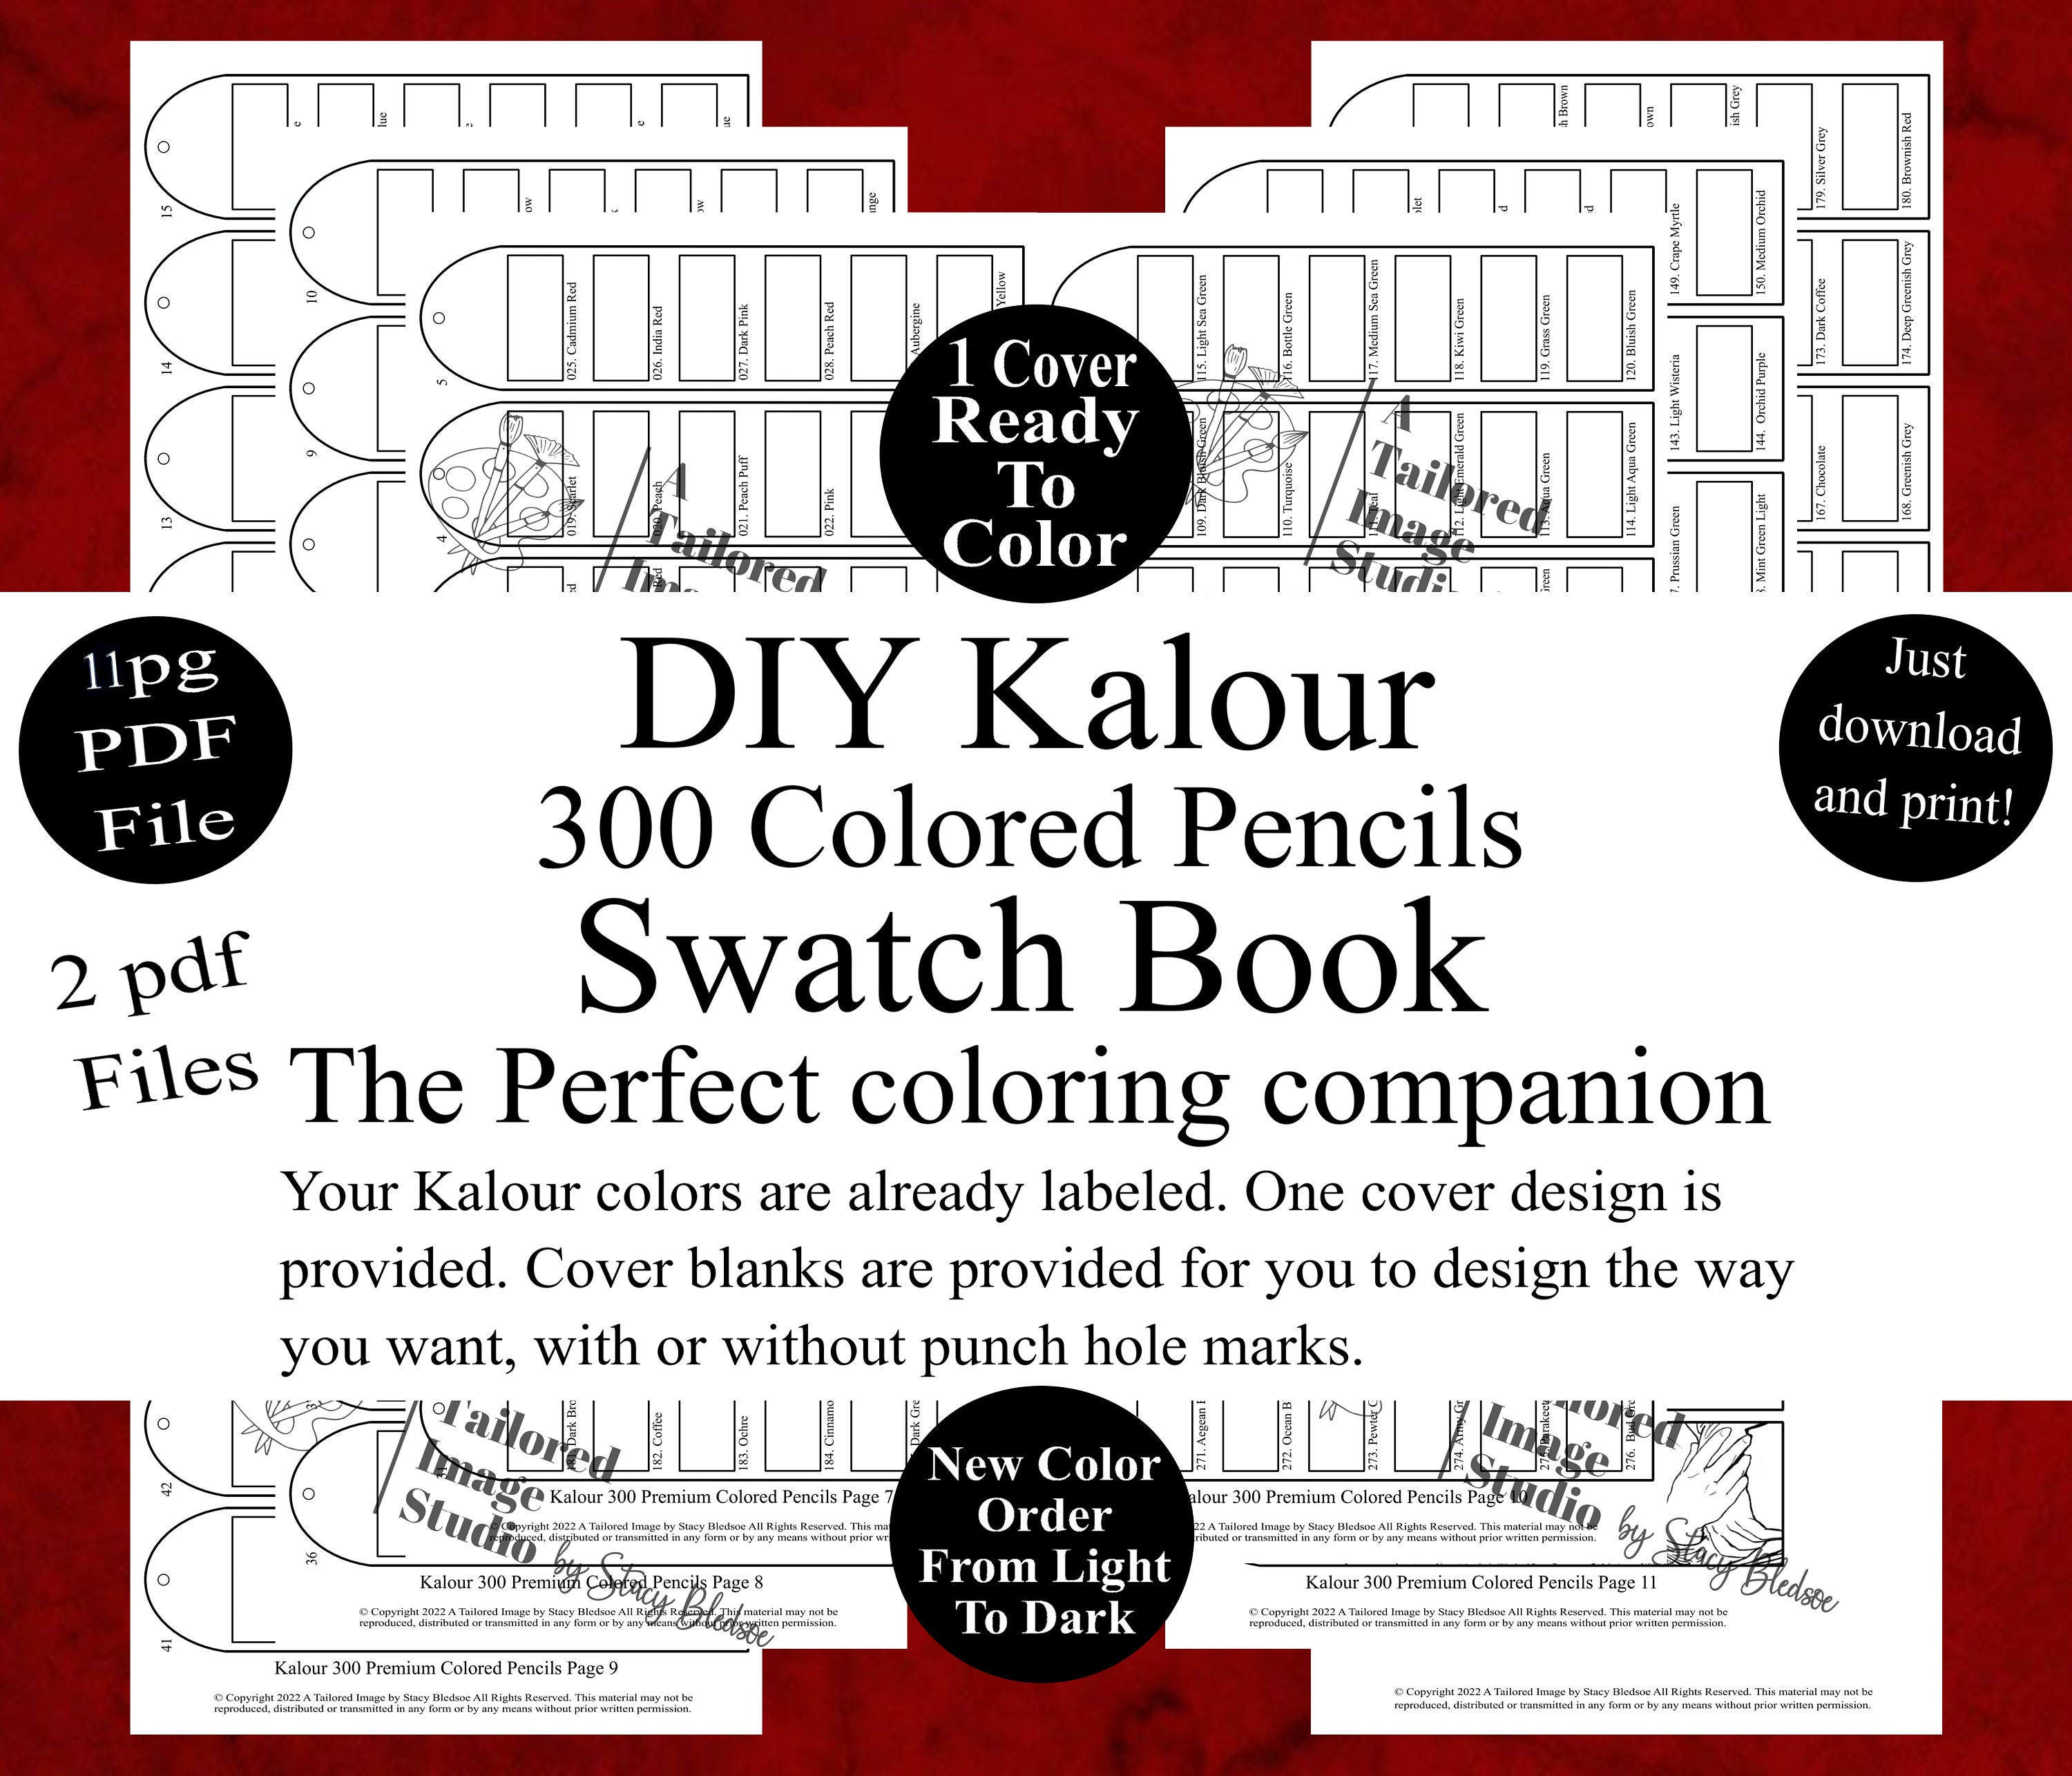 Kalour 520 Colored Pencil Set DIY Blank Color Chart /swatch Sheet